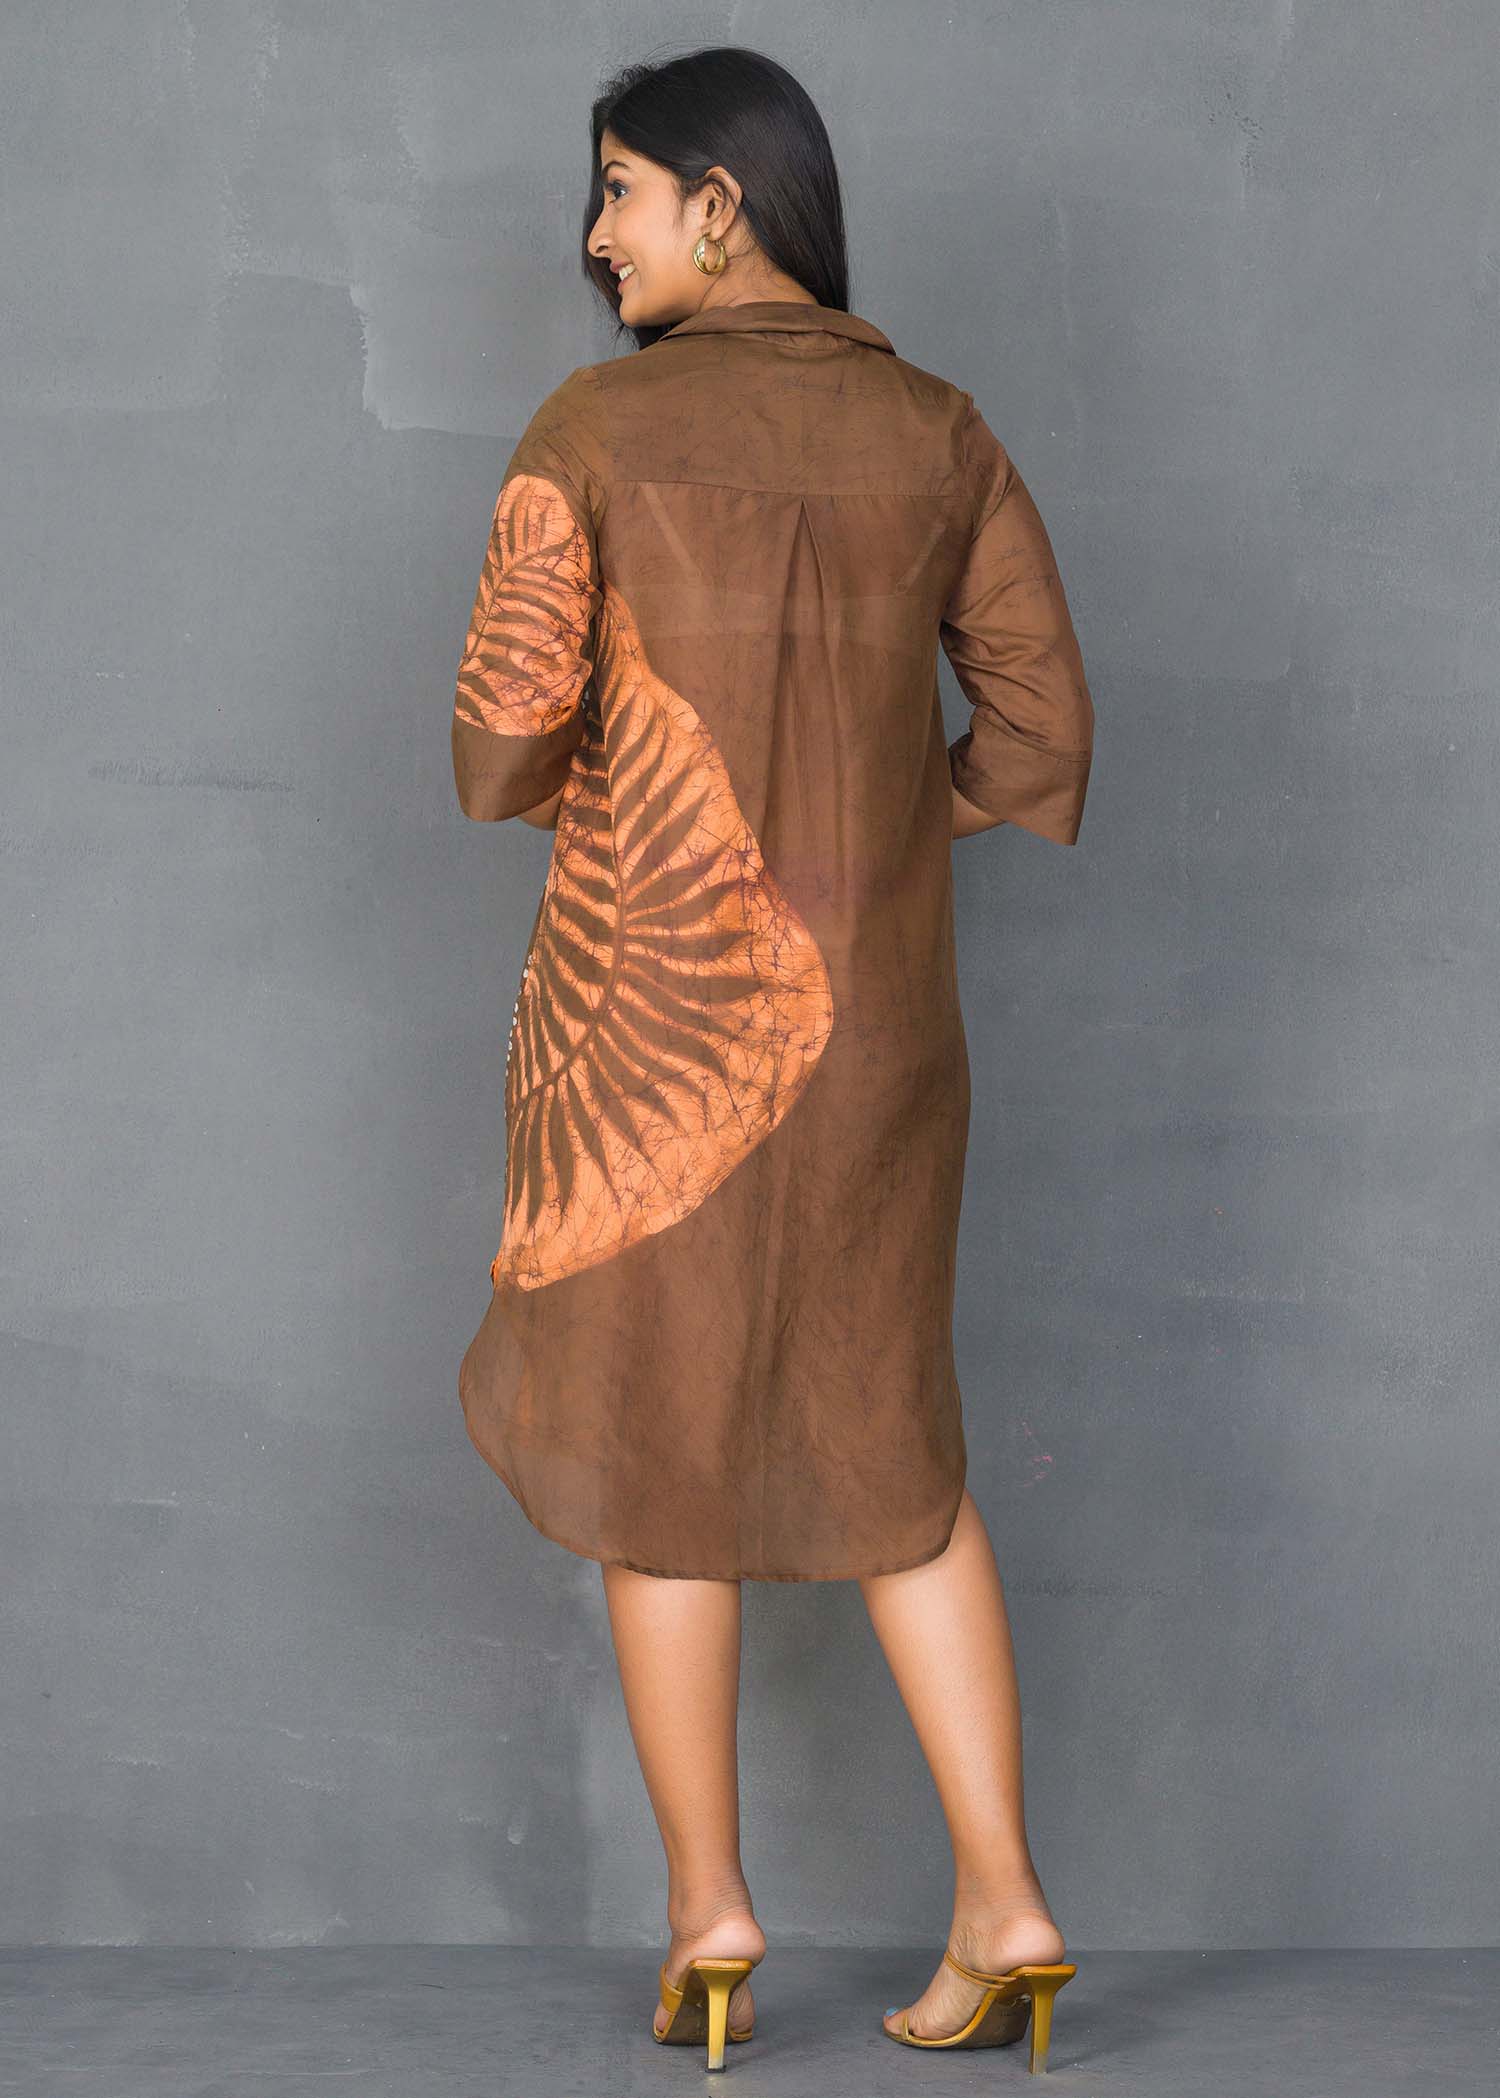 Leaves detailed collerd batik dress